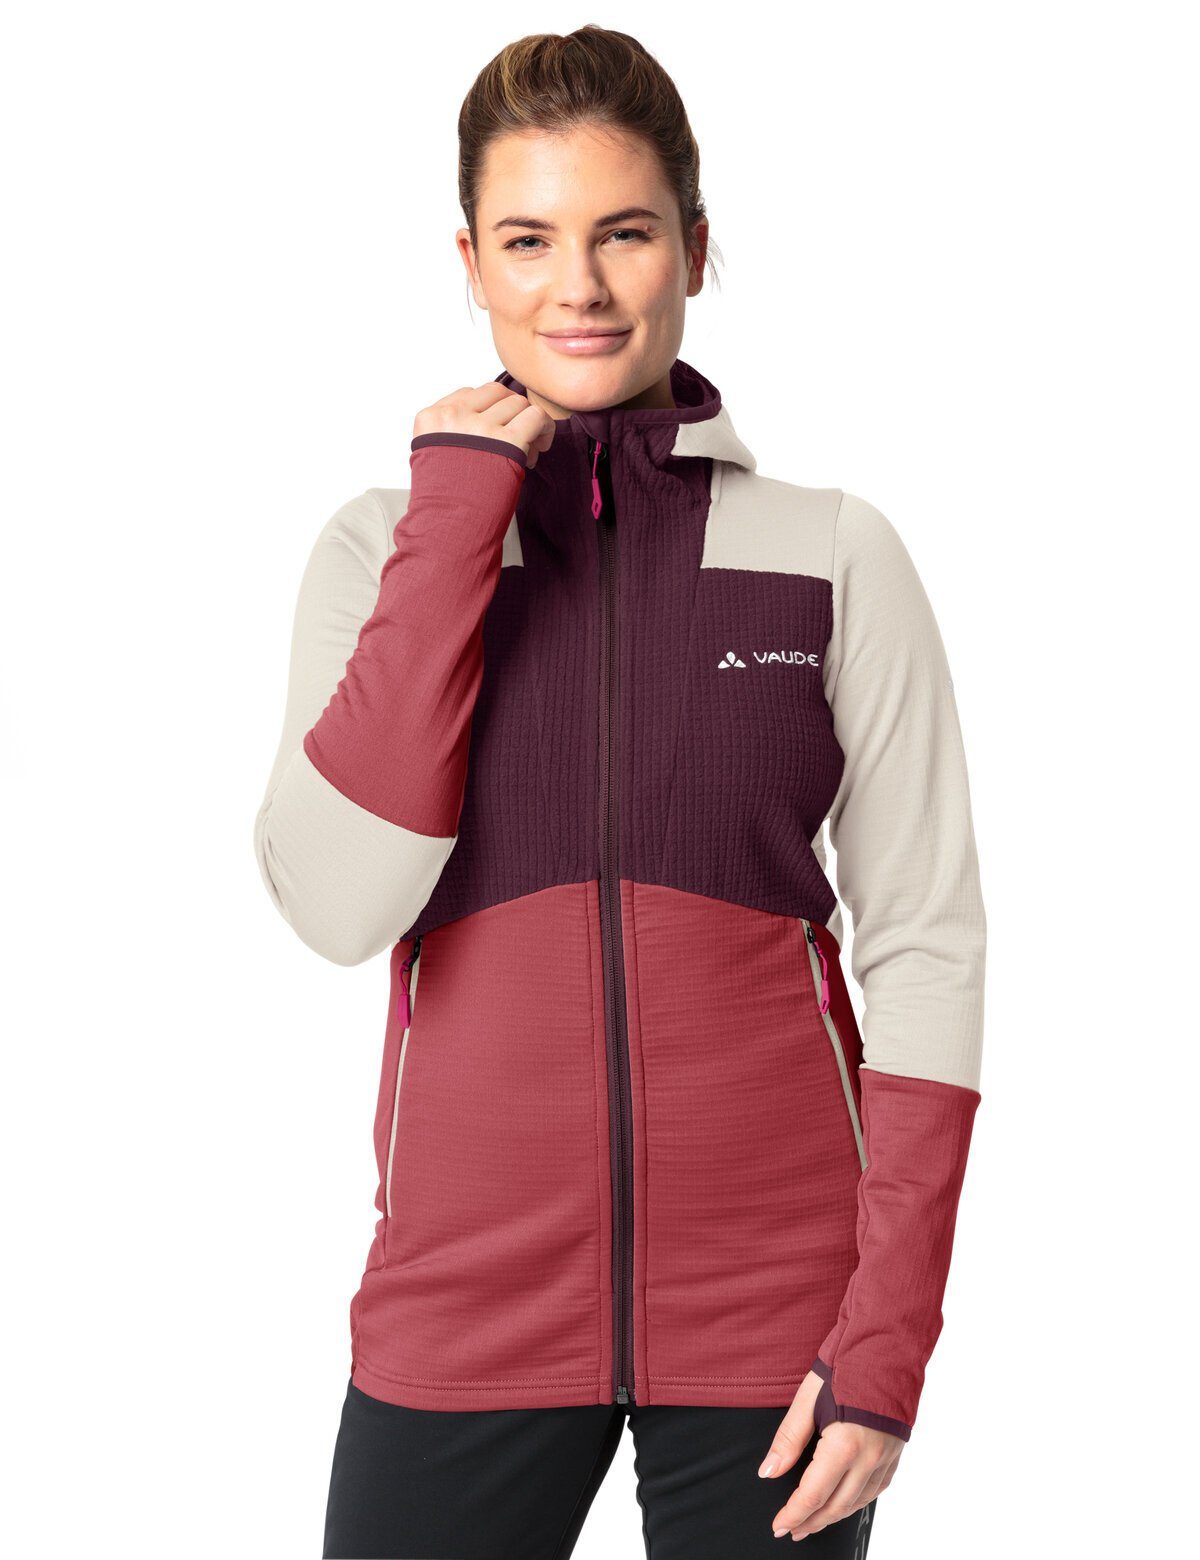 (1-St) VAUDE Klimaneutral kompensiert Fleece Grid cassis Jacket Women's Outdoorjacke Monviso Hooded